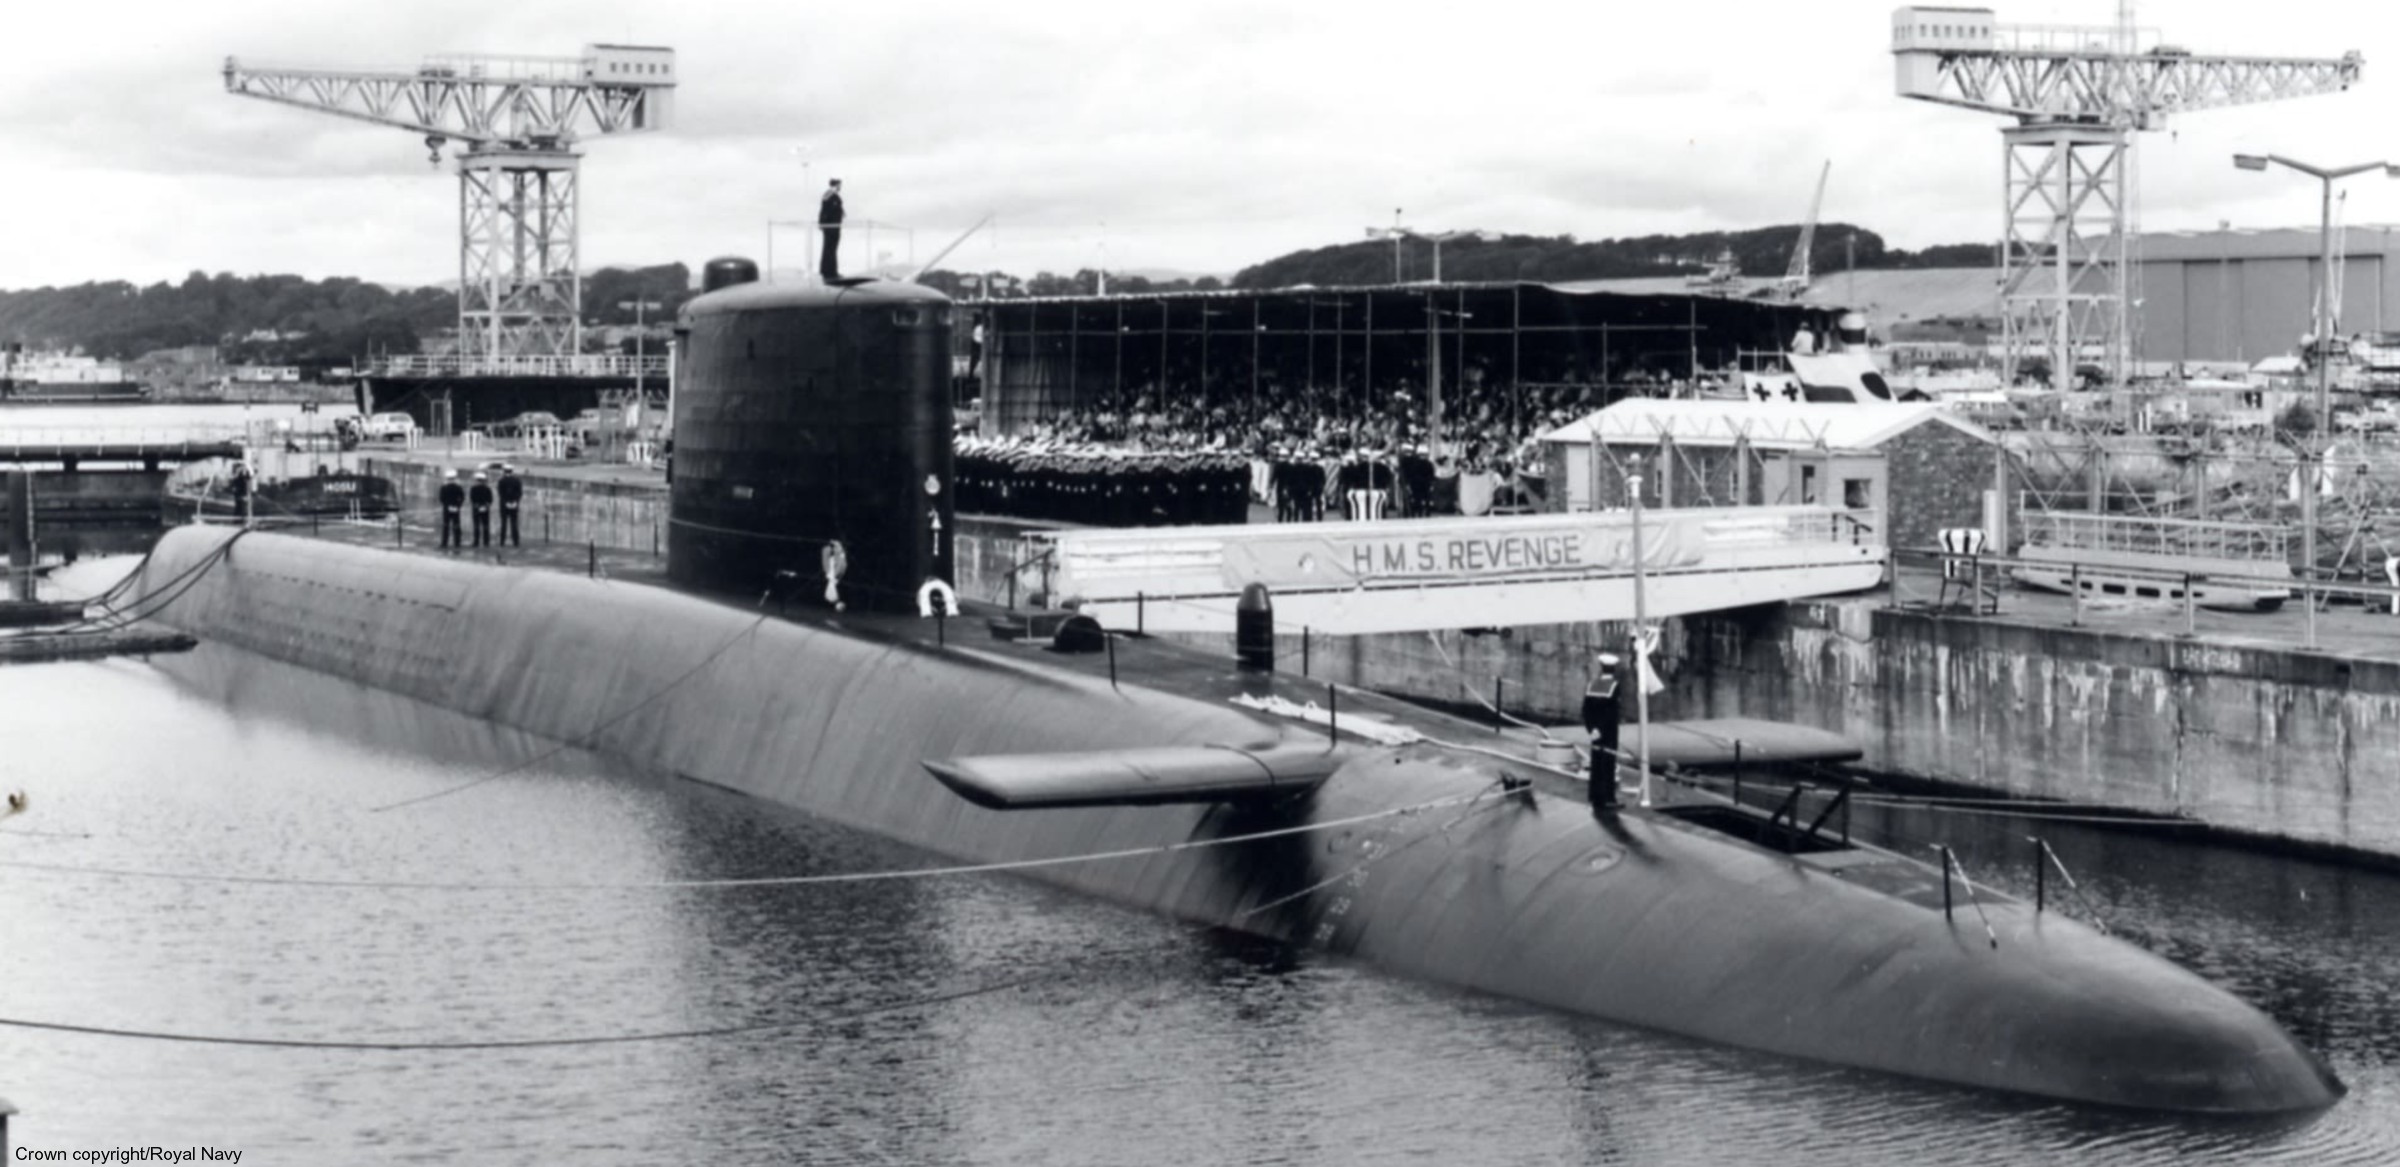 s27 hms revenge resolution class ballistic missile submarine ssbn polaris slbm royal navy 02